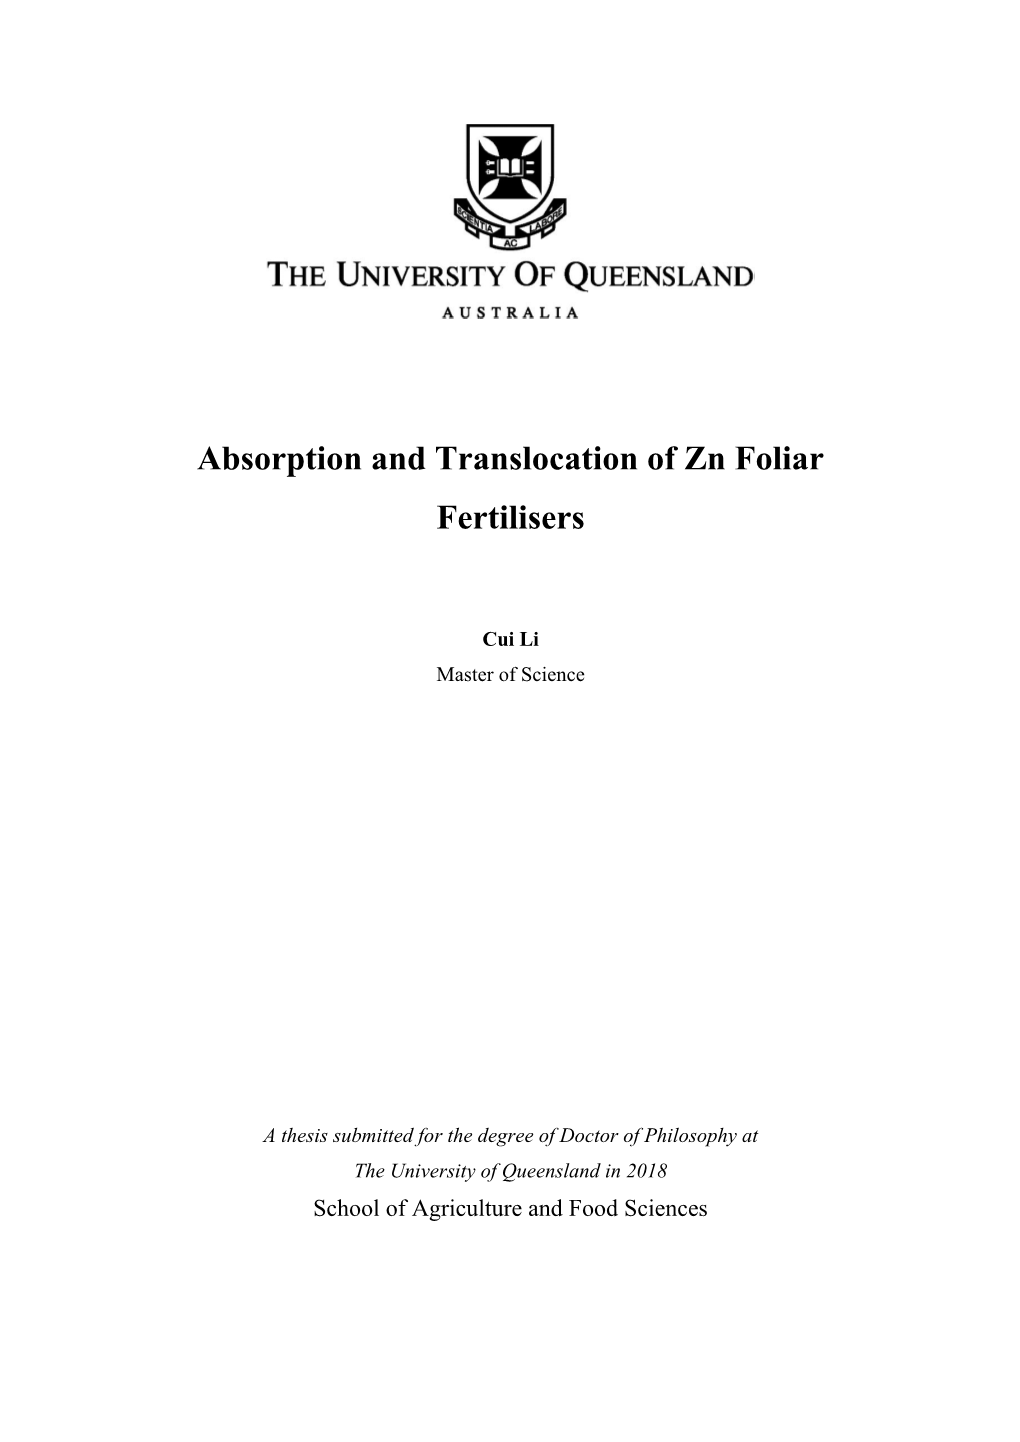 Absorption and Translocation of Zn Foliar Fertilisers